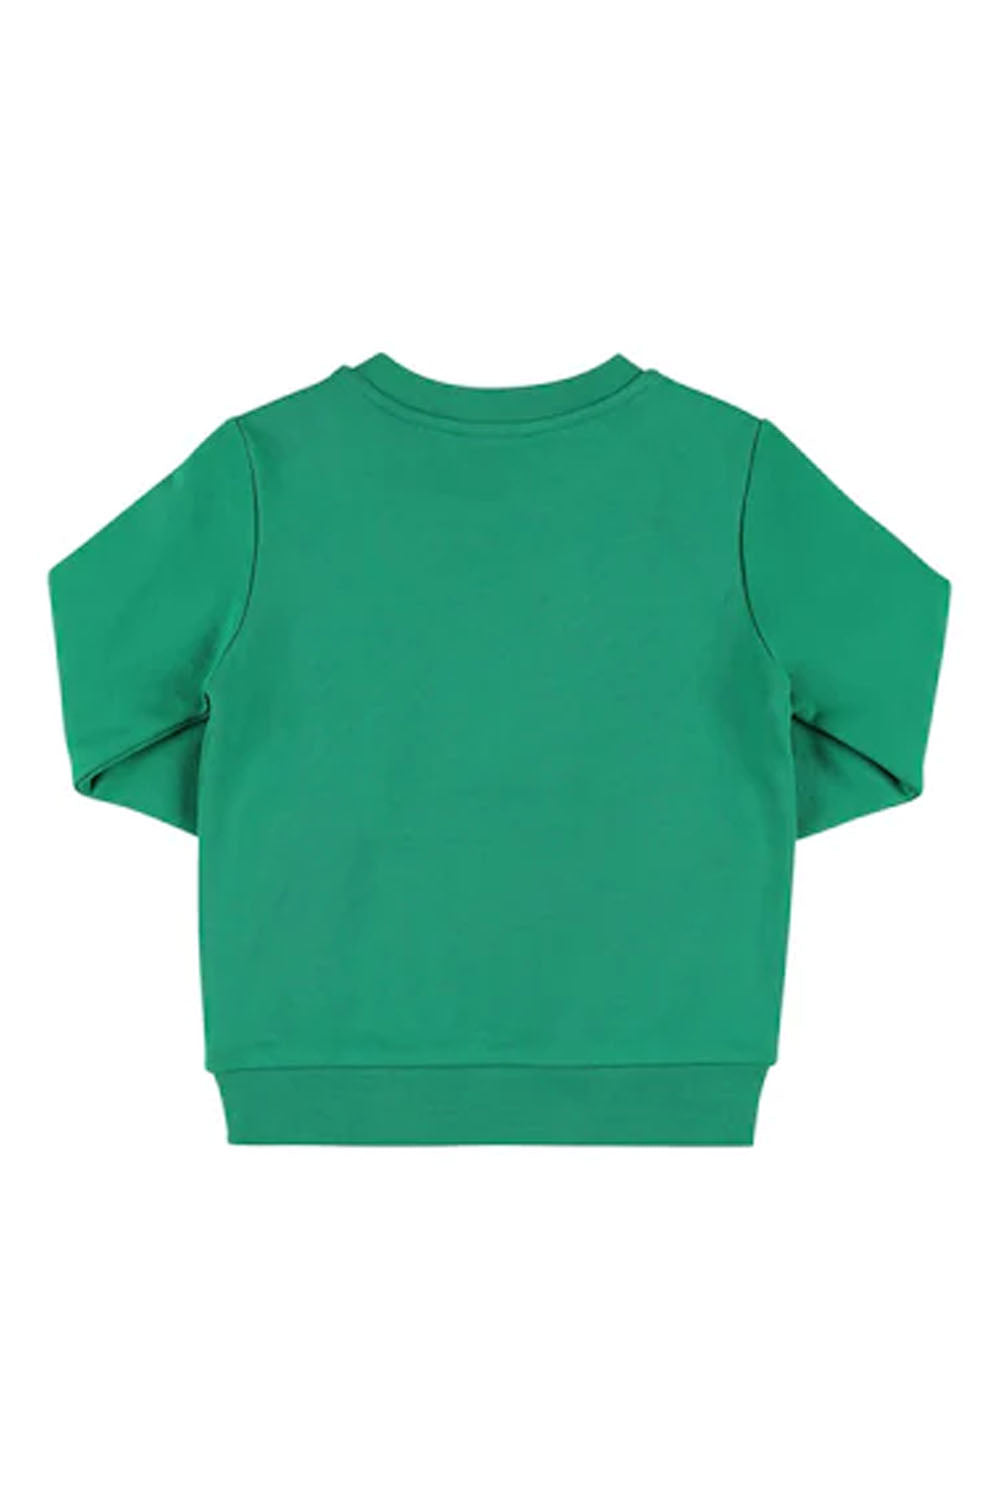 Elephant print Sweatshirt for Boys - Maison7